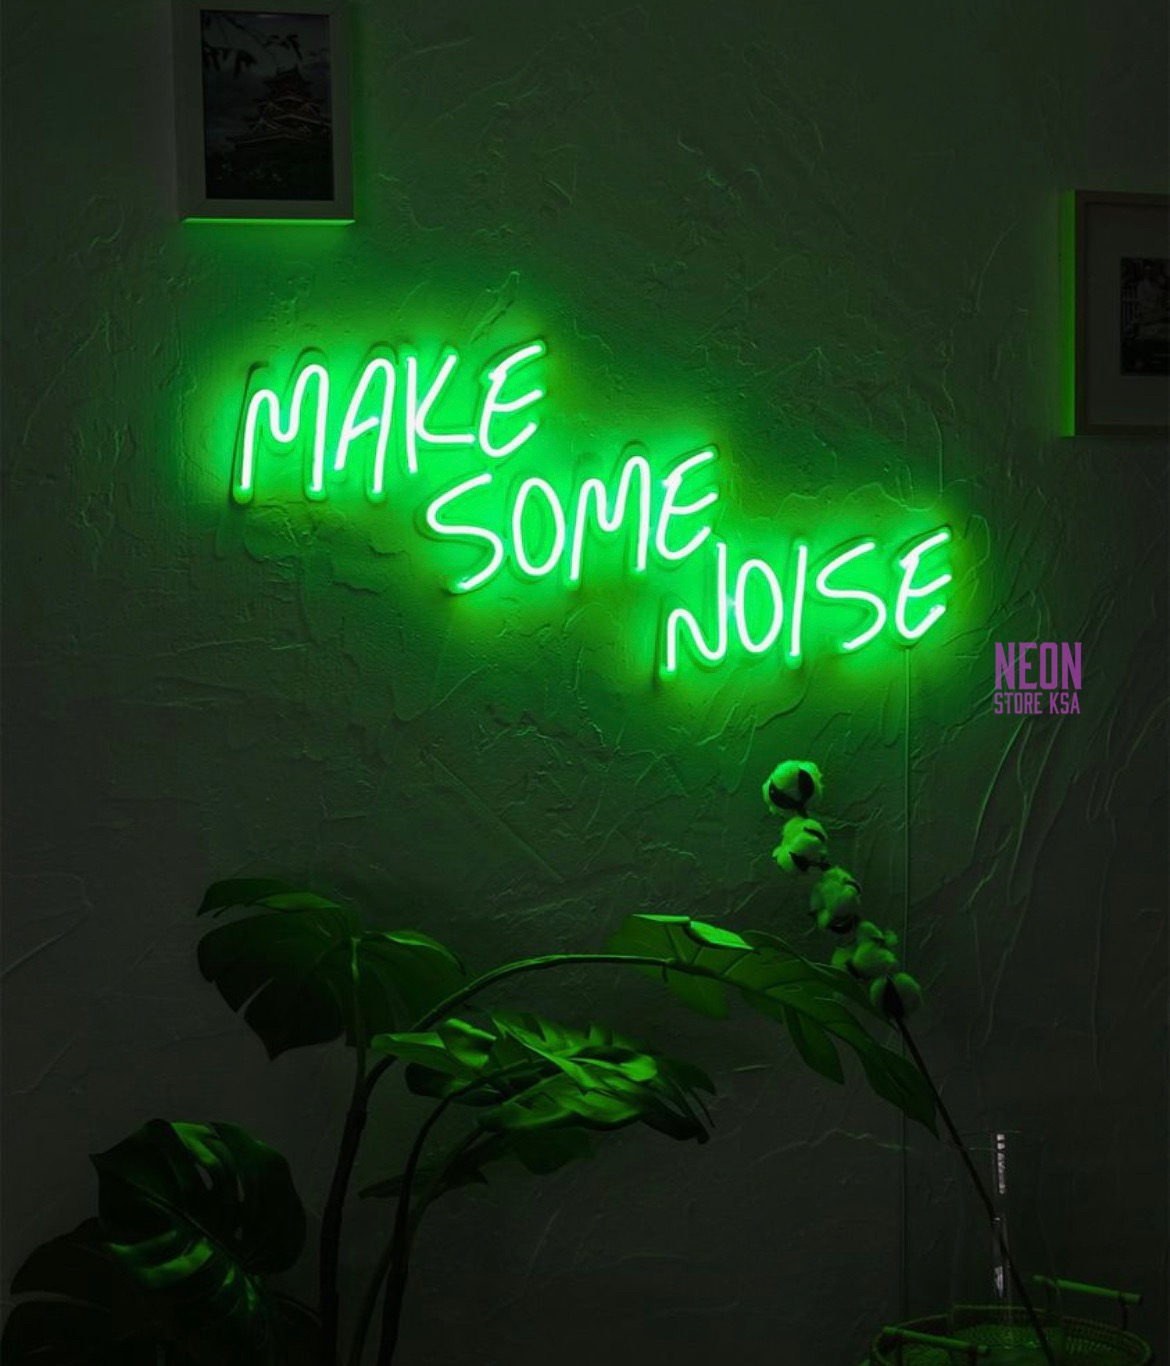 Make Some Noise - Neon Art